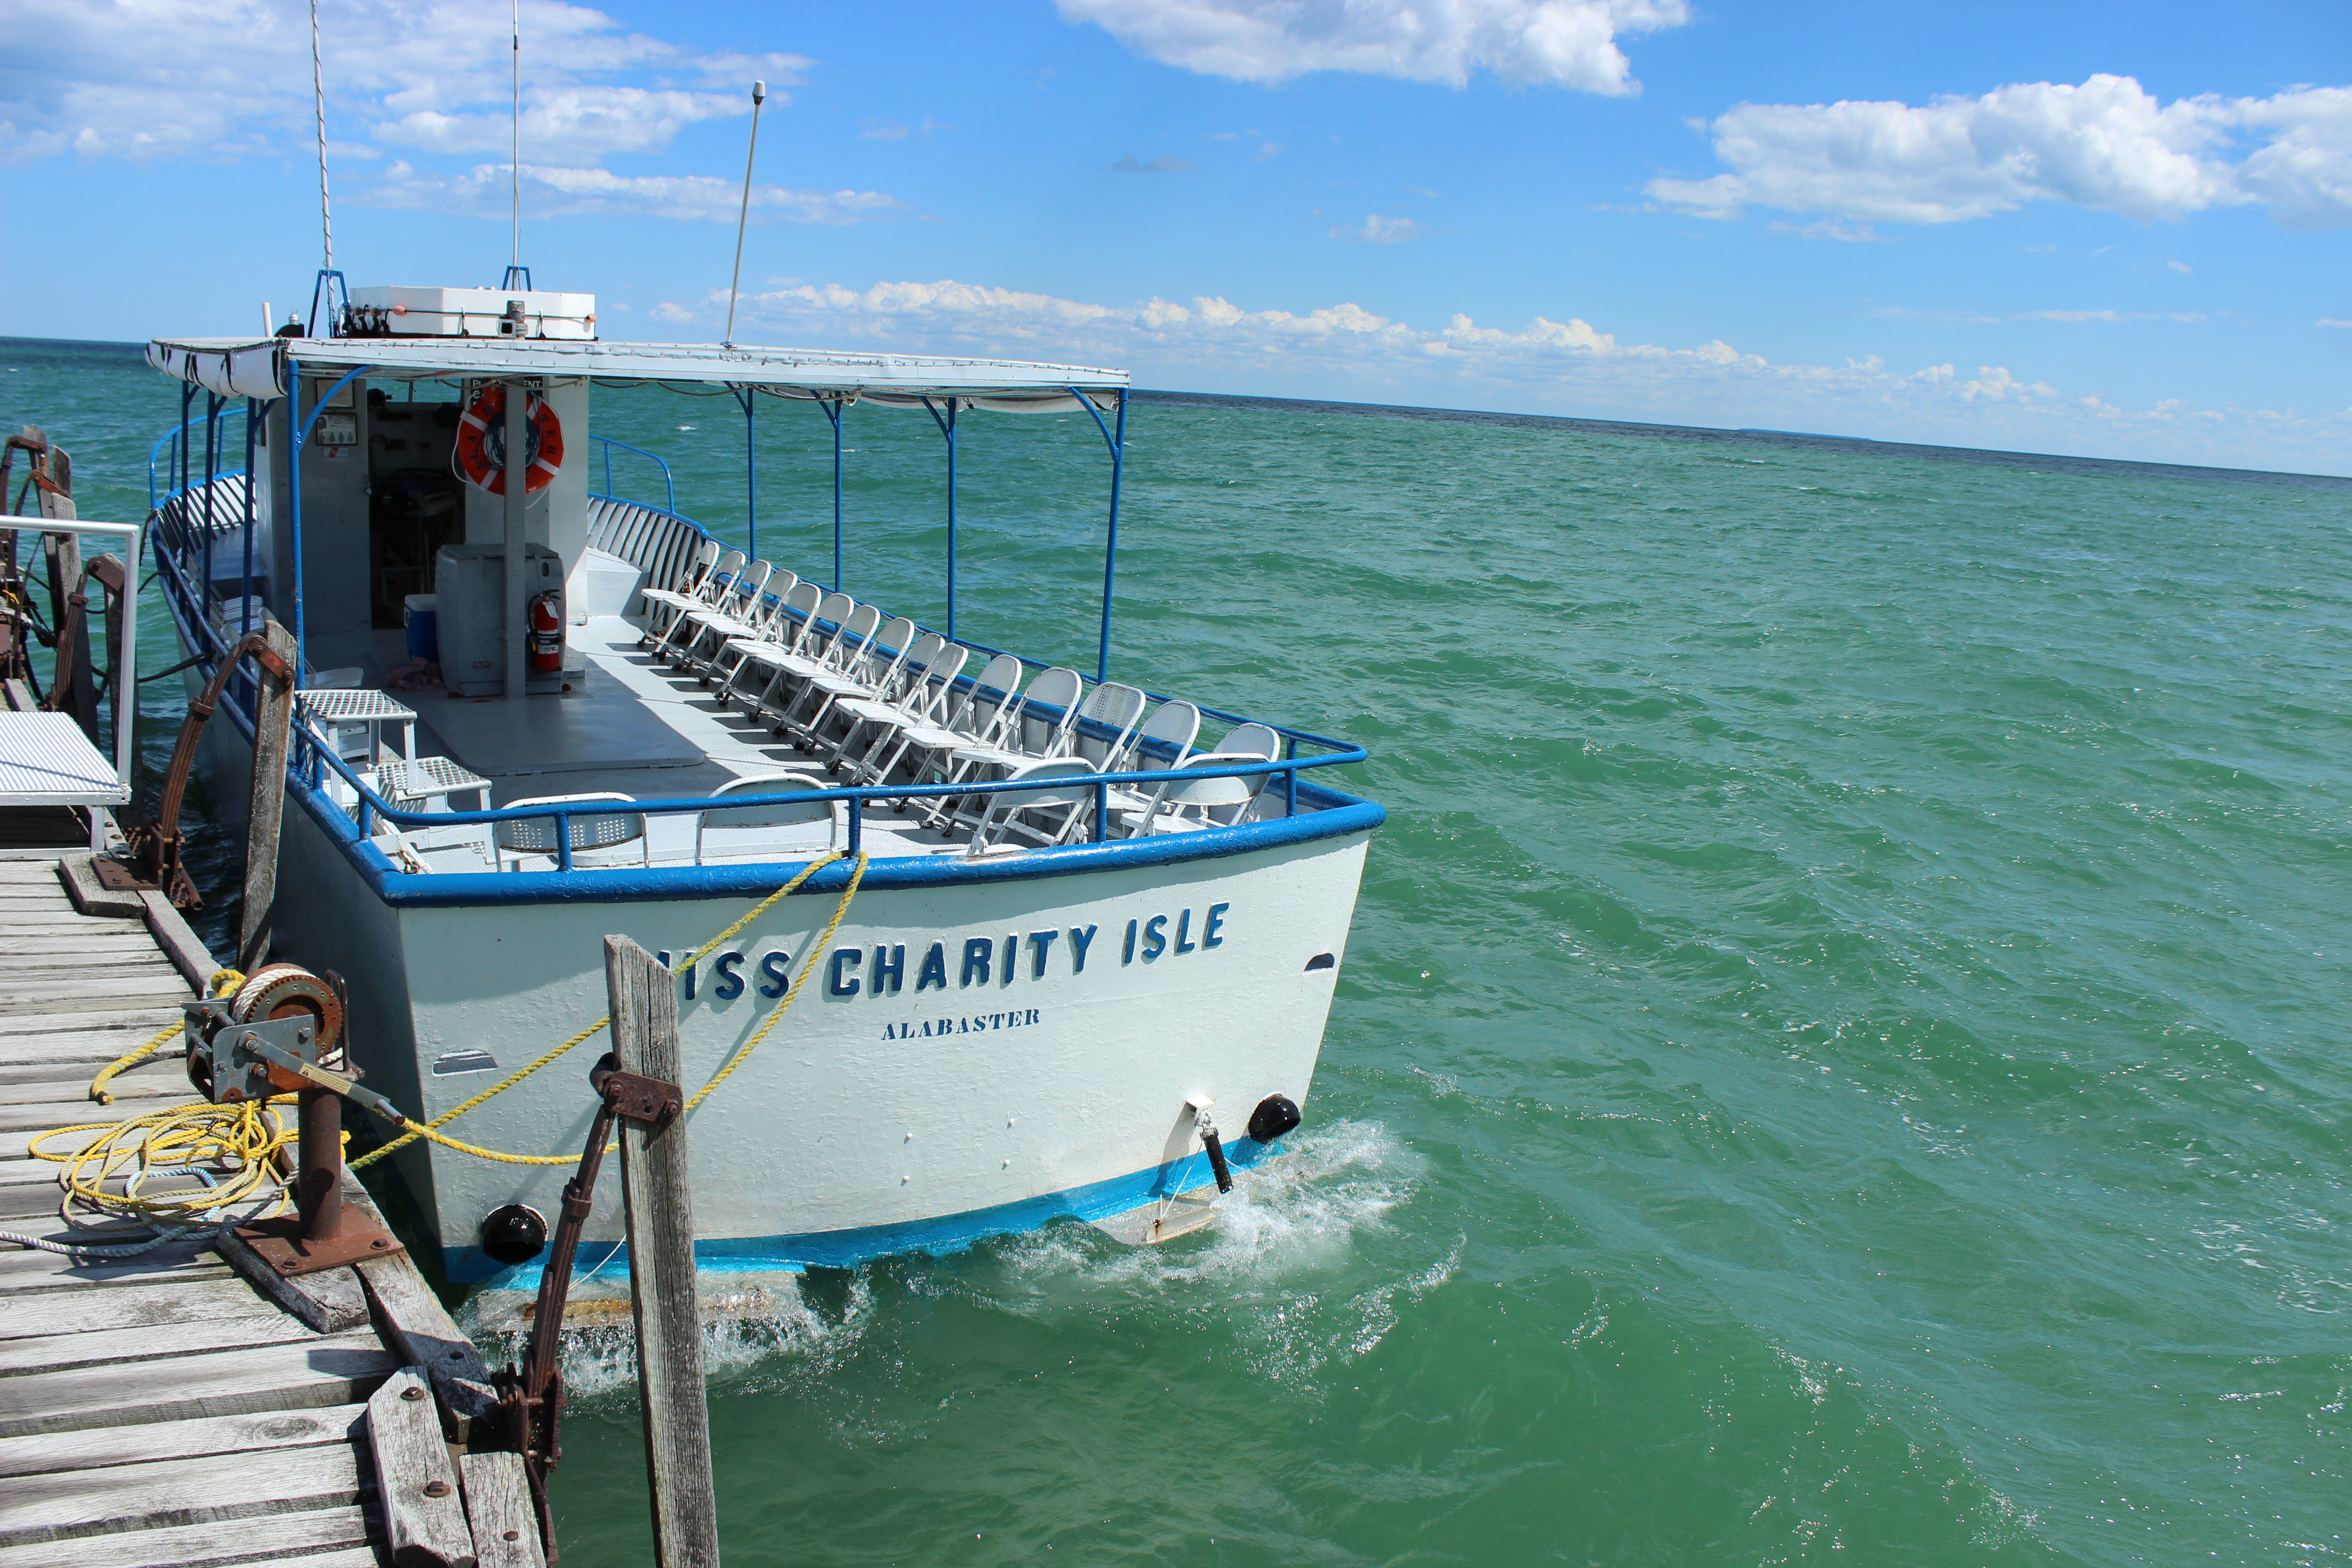 Charity Island Lighthouse Cruise Miss Charity Isle